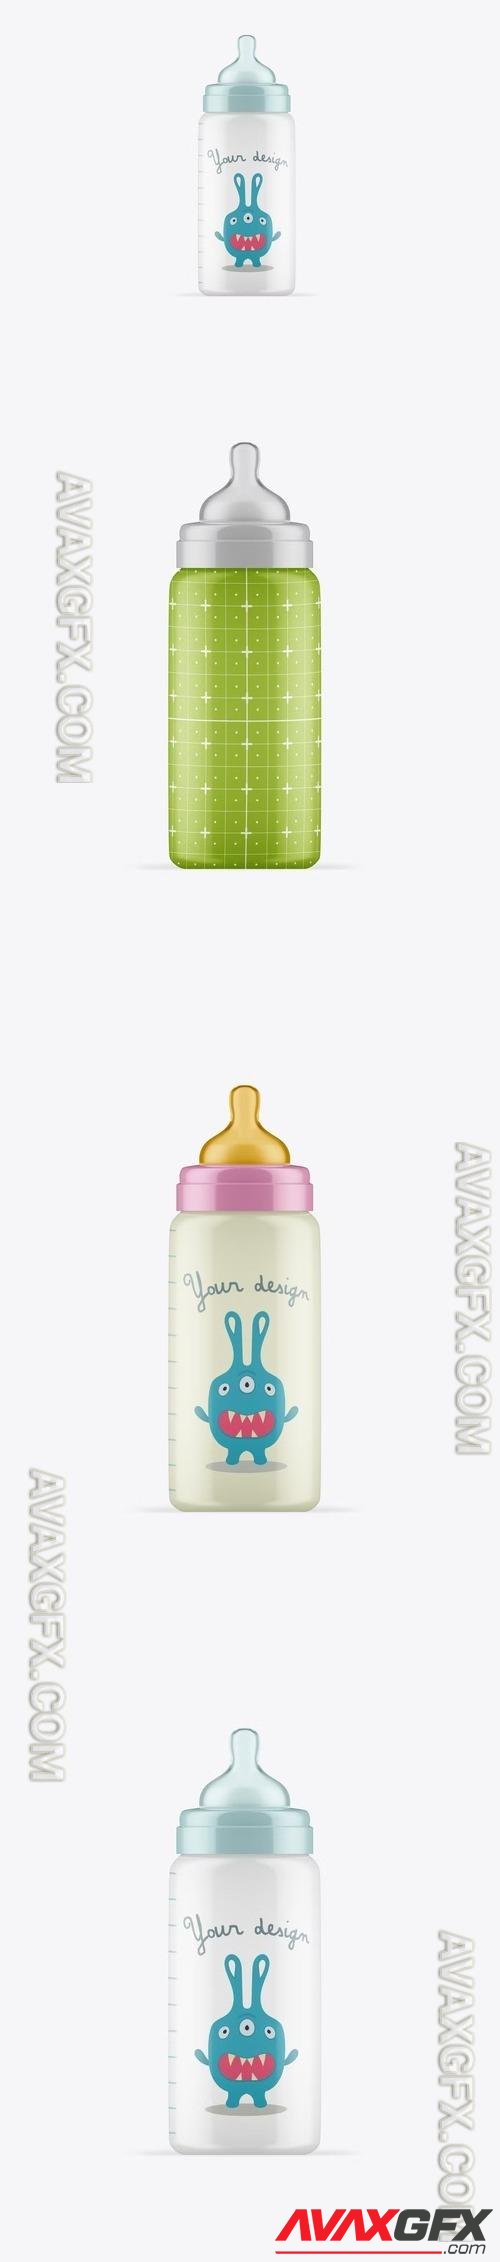 Baby Bottle Mockup